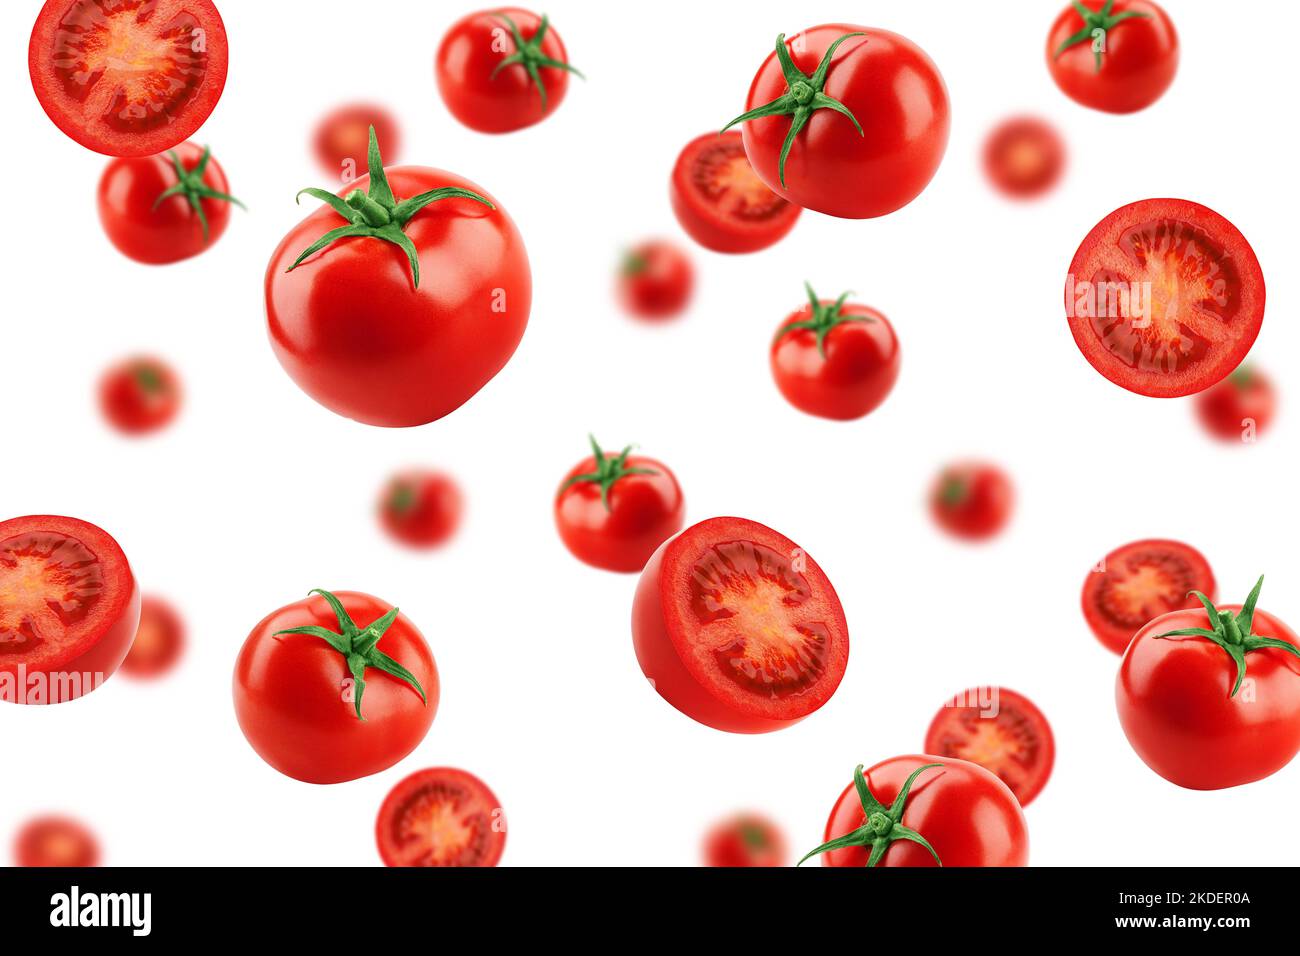 Falling tomato isolated on white background, selective focus Stock Photo